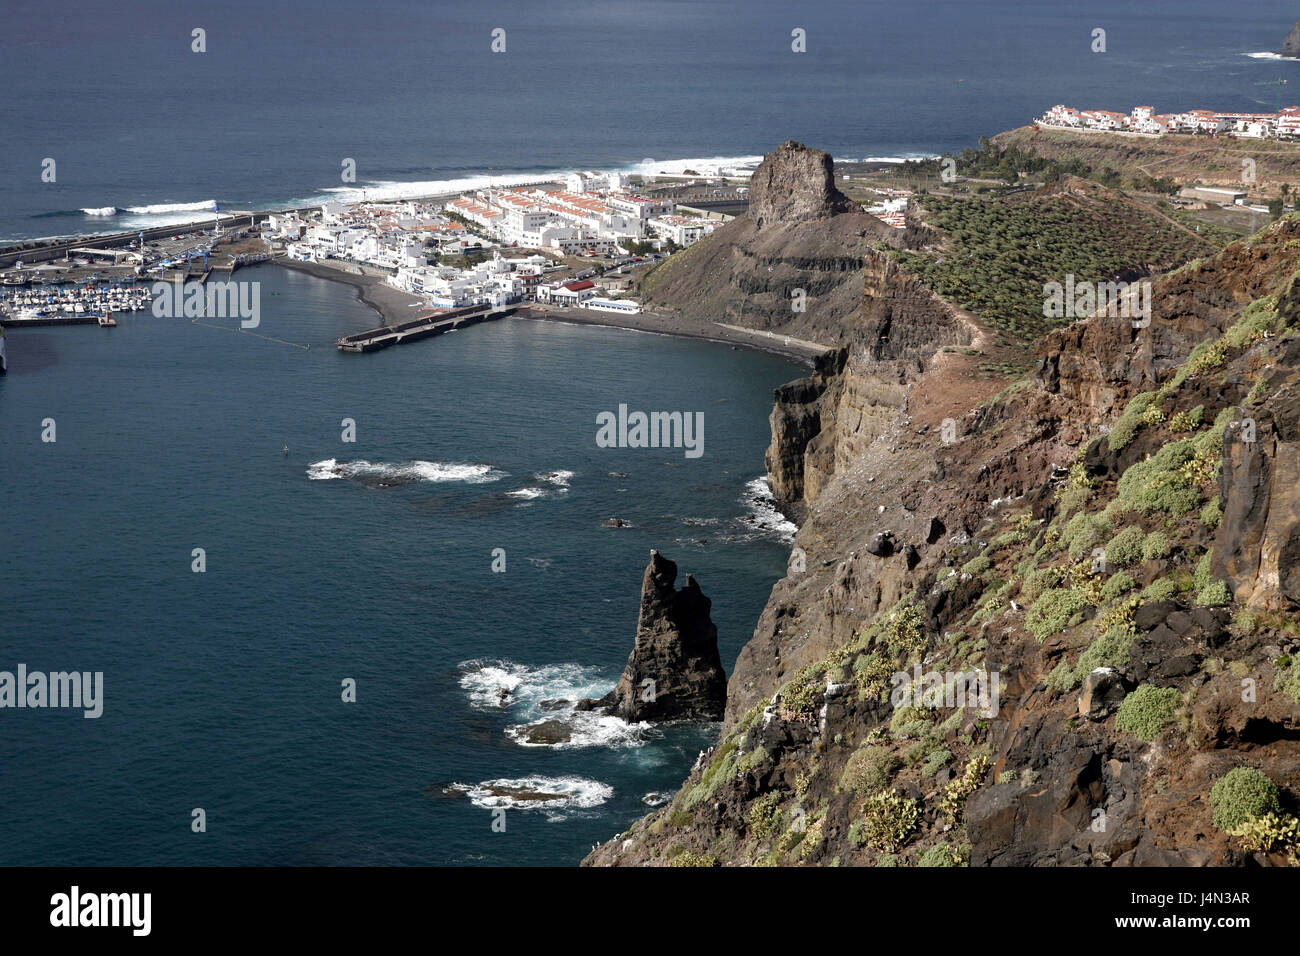 Spain, grain Canaria, Agaete, Puerto de read Nieves, local overview, harbour, Stock Photo